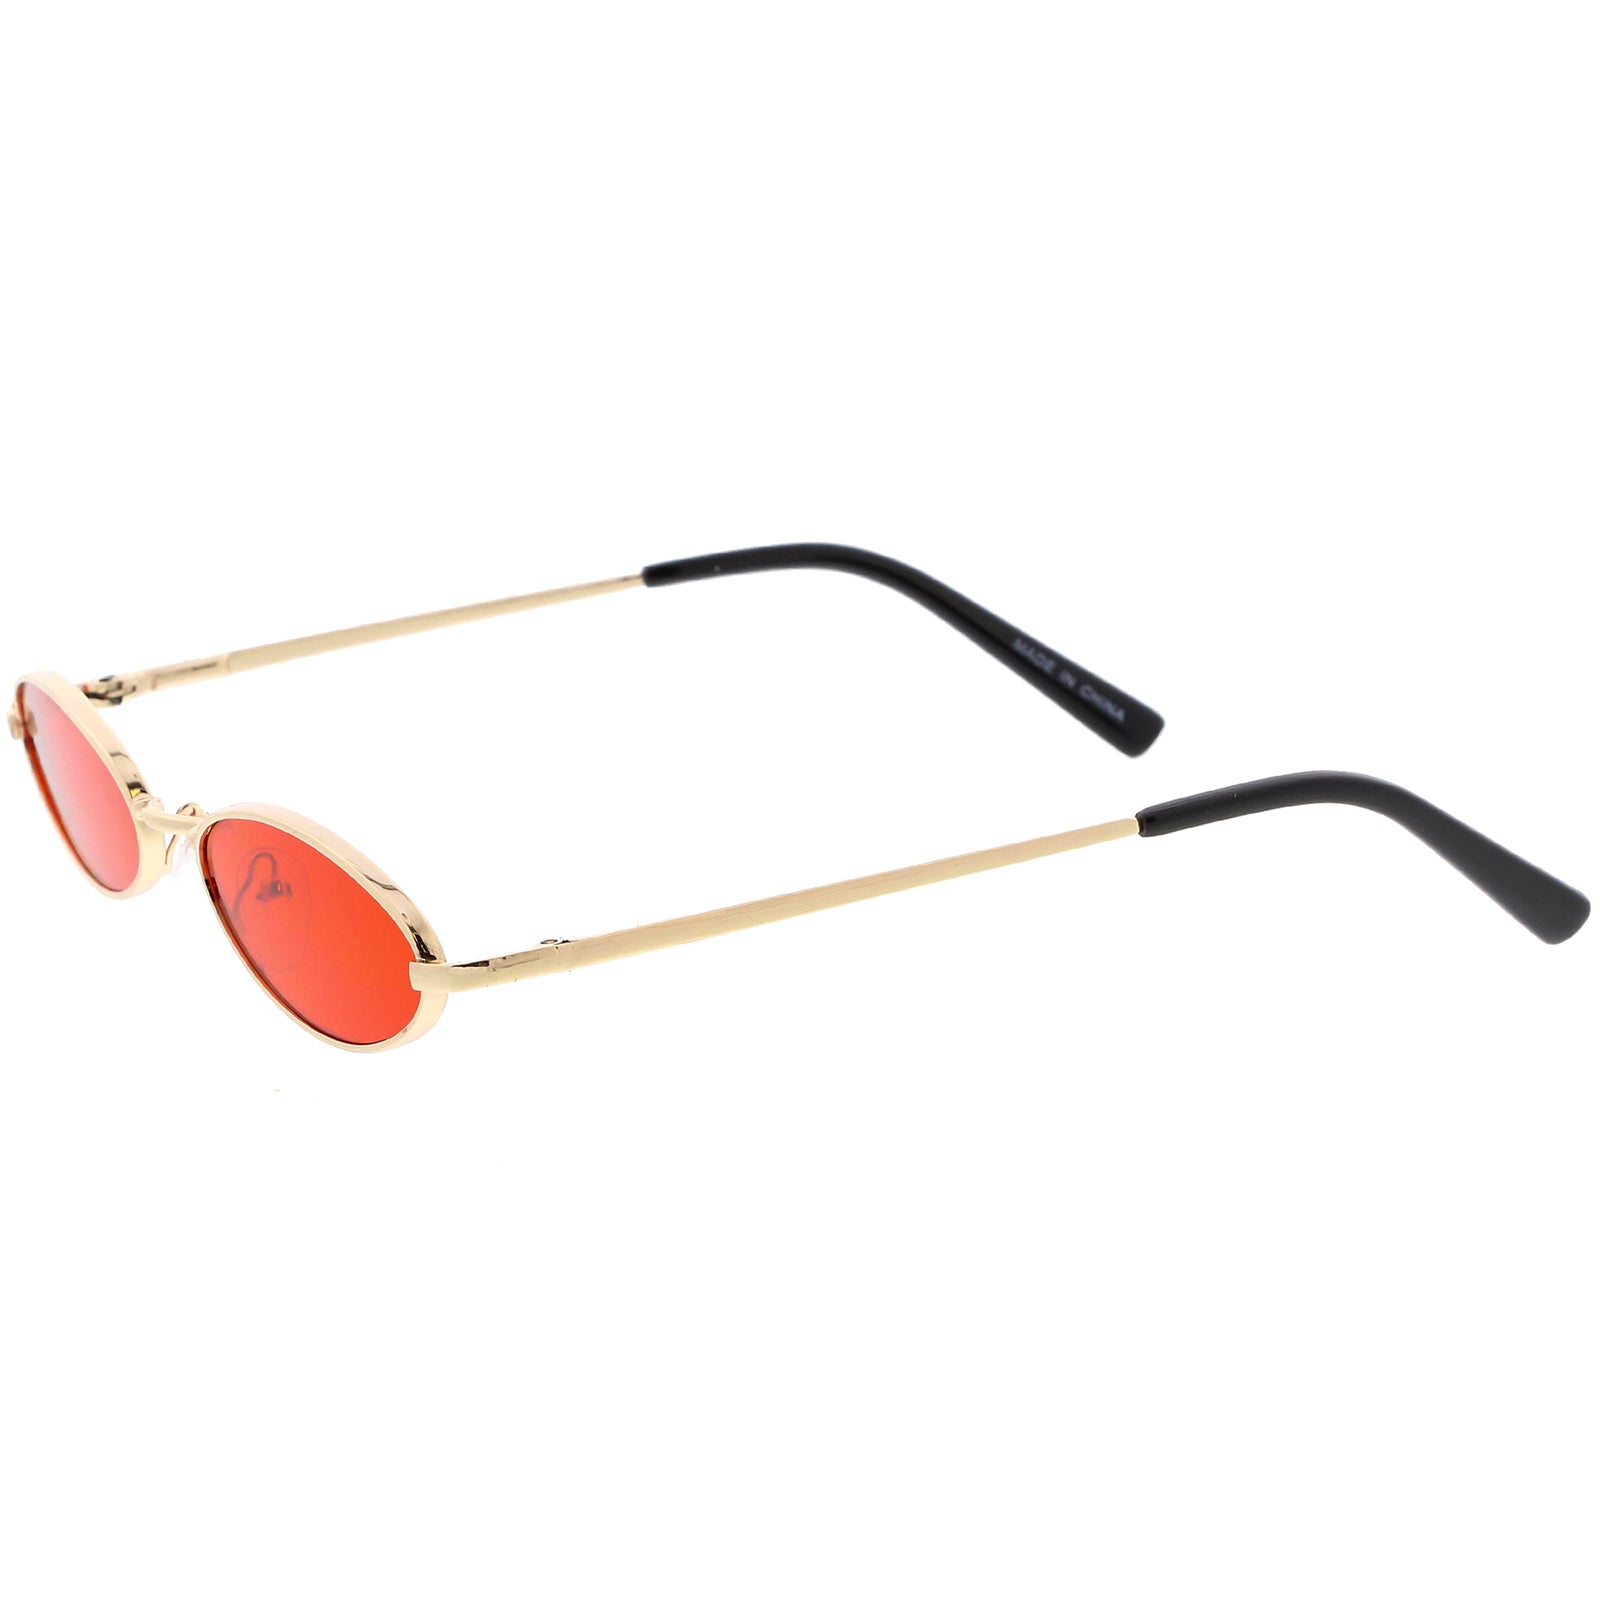 Retro Small Oval Sunglasses Slim Arms Color Tinted Flat Lens 51mm - sunglass .la